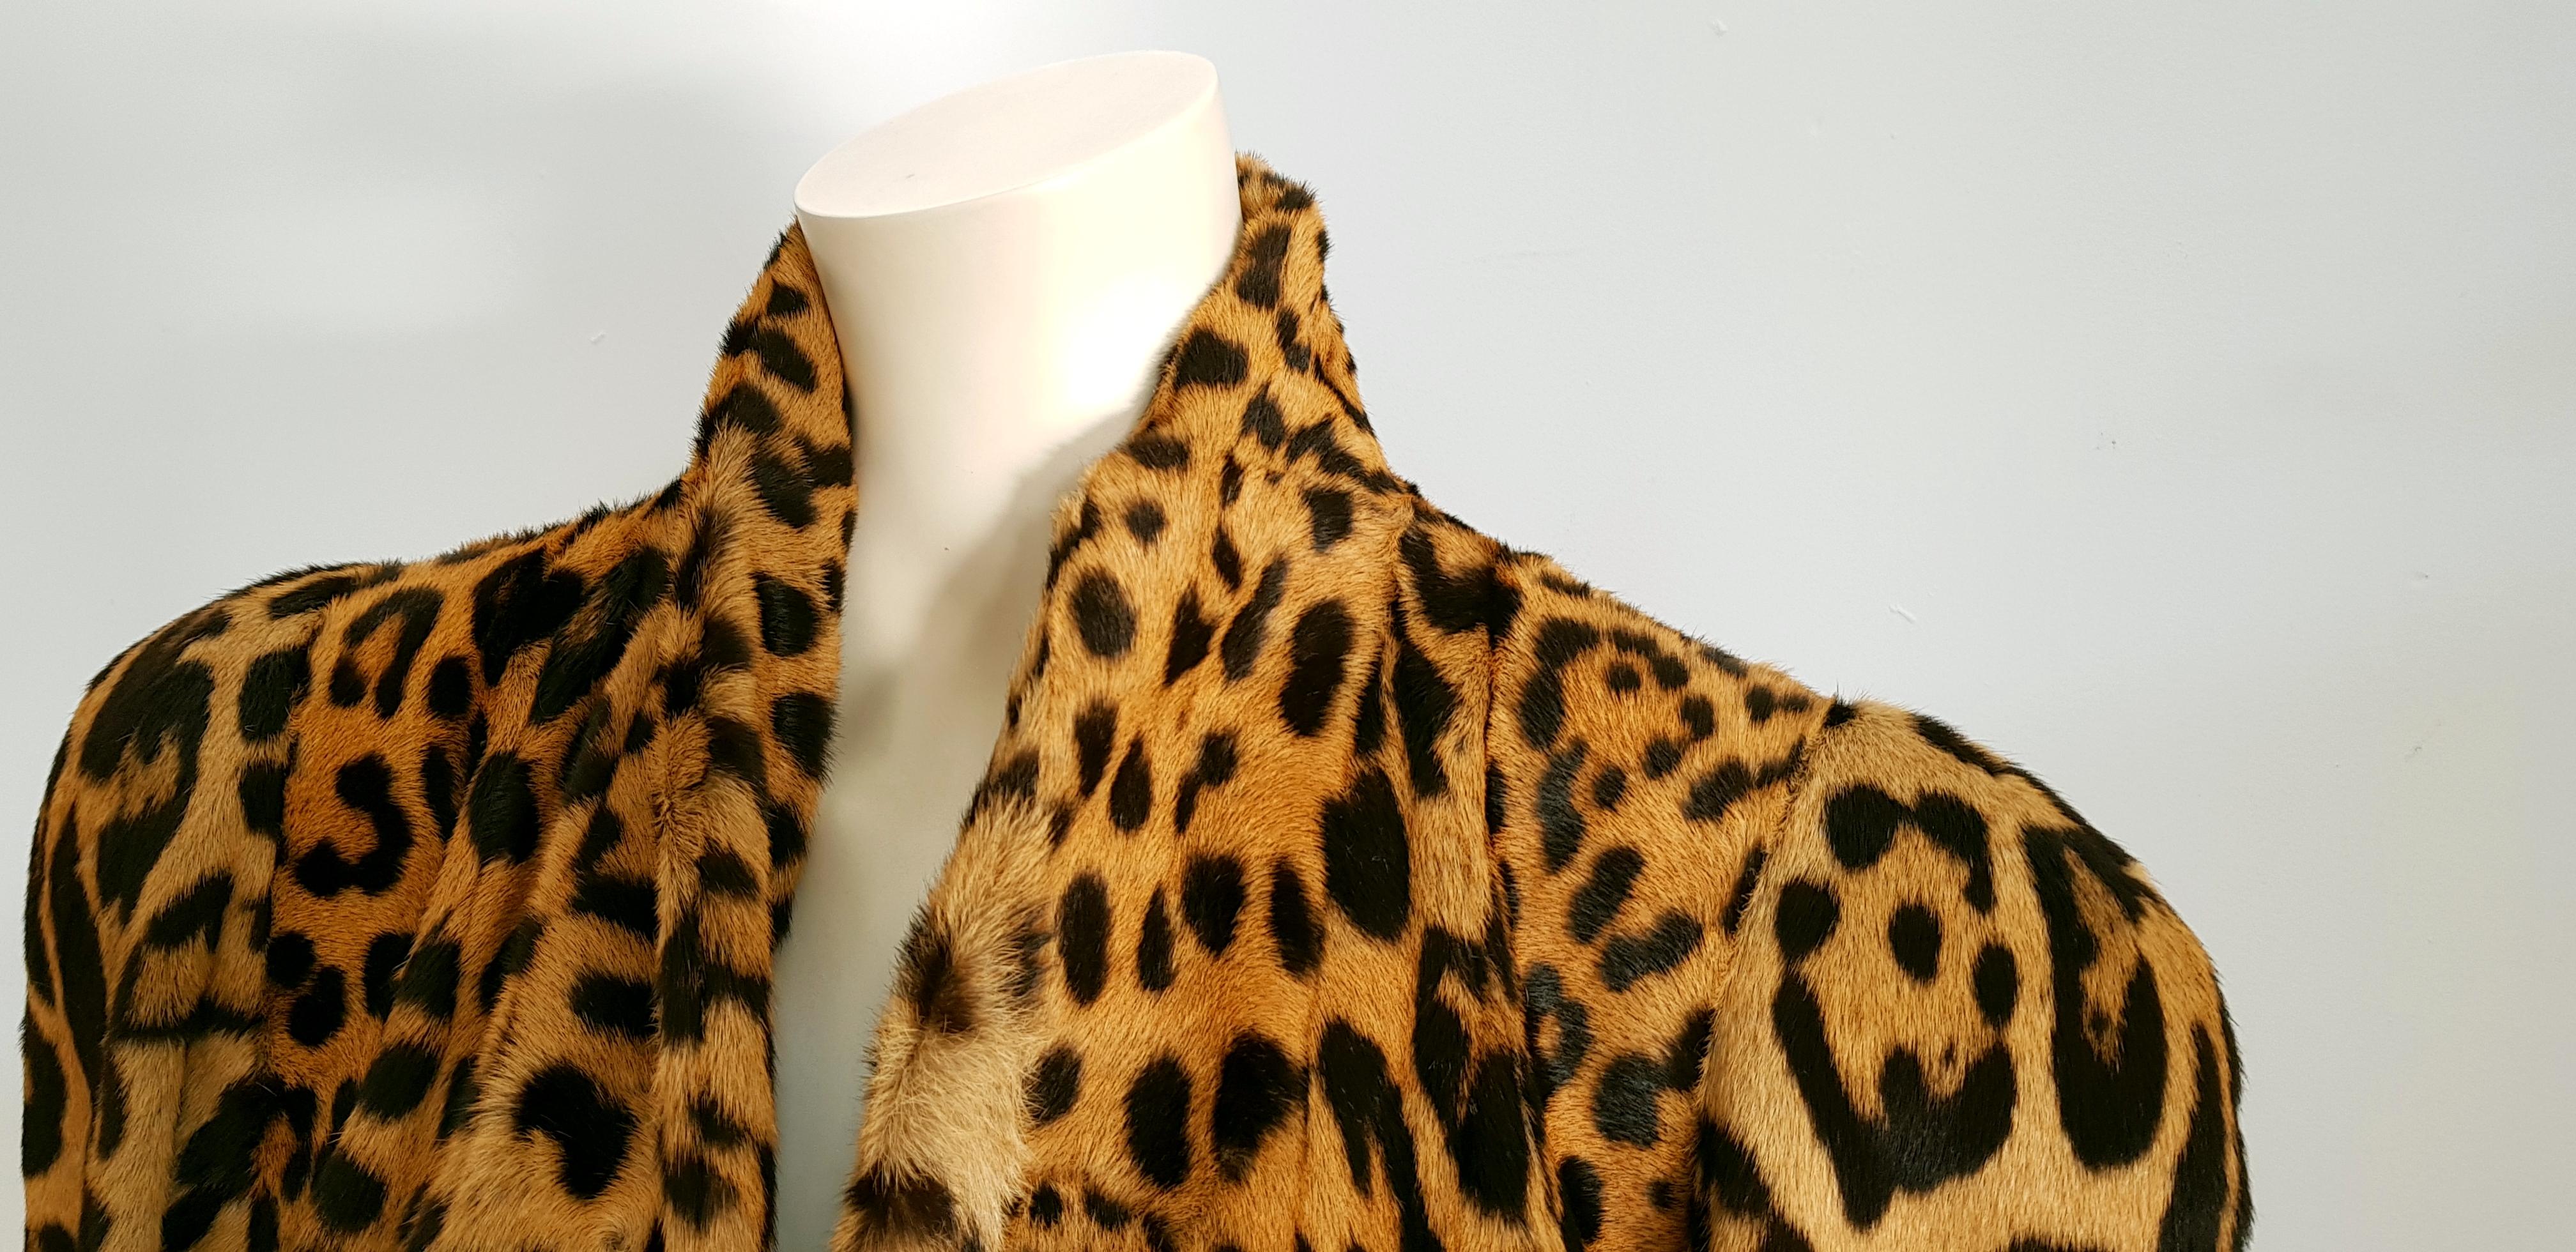 Haute Couture MANFRIANI Florence Rare Wild Jaguar Fur (Pre-Ban) Coat. Unworn  For Sale 1